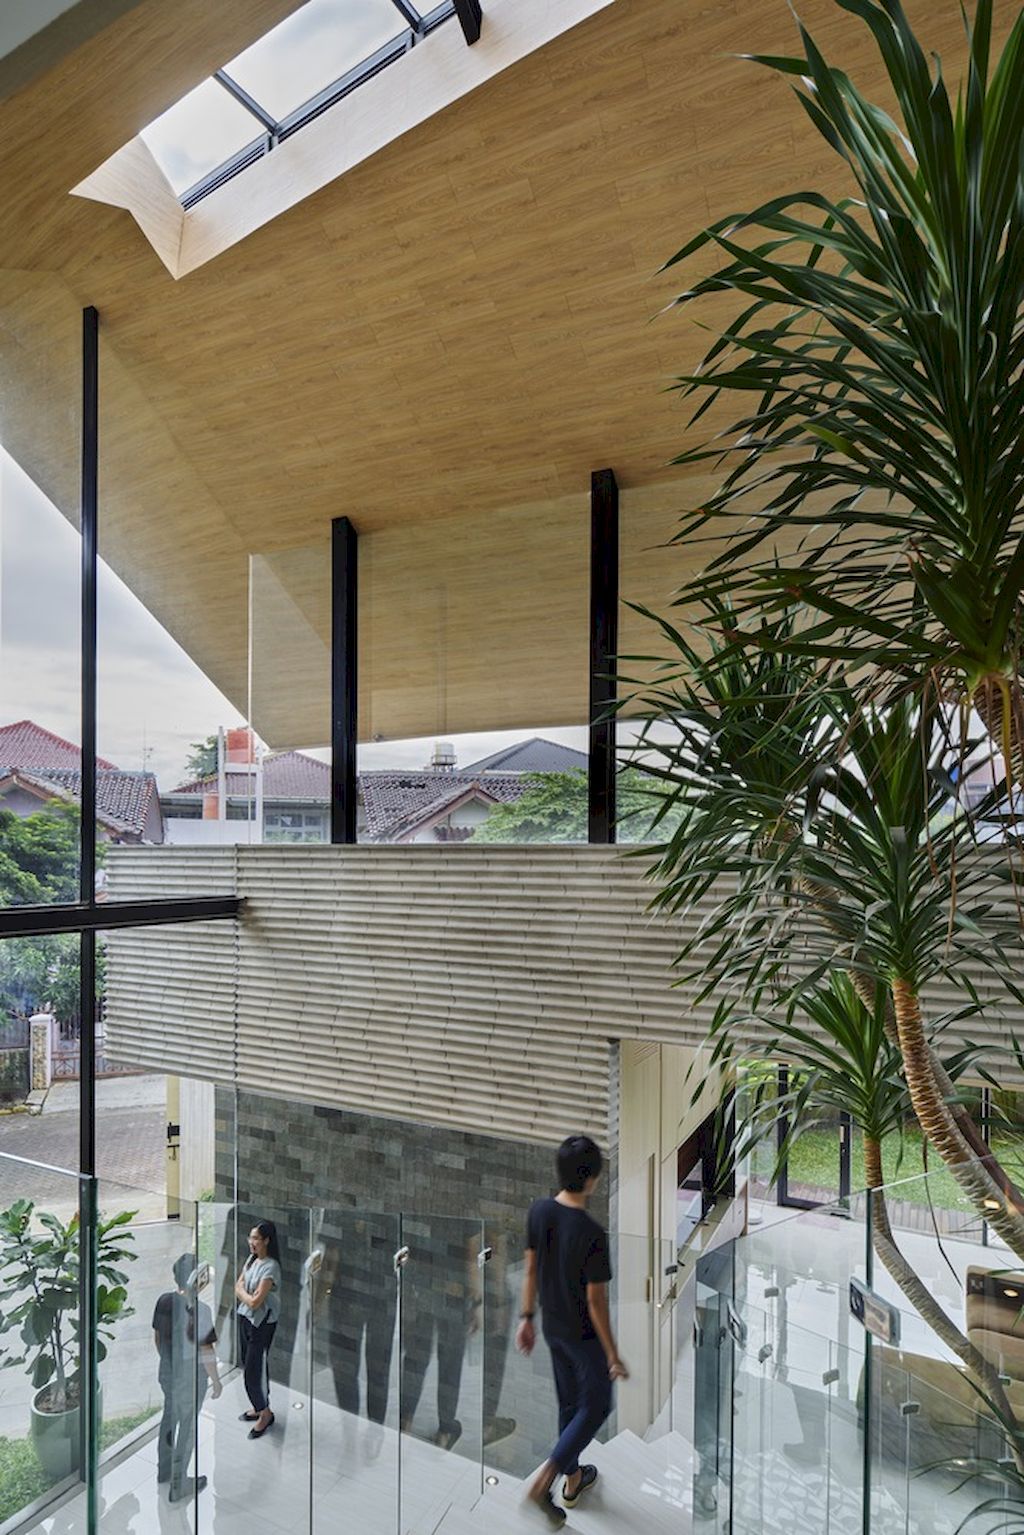 Bernaung House in tropical belt location, reach sustainability by RAD+AR